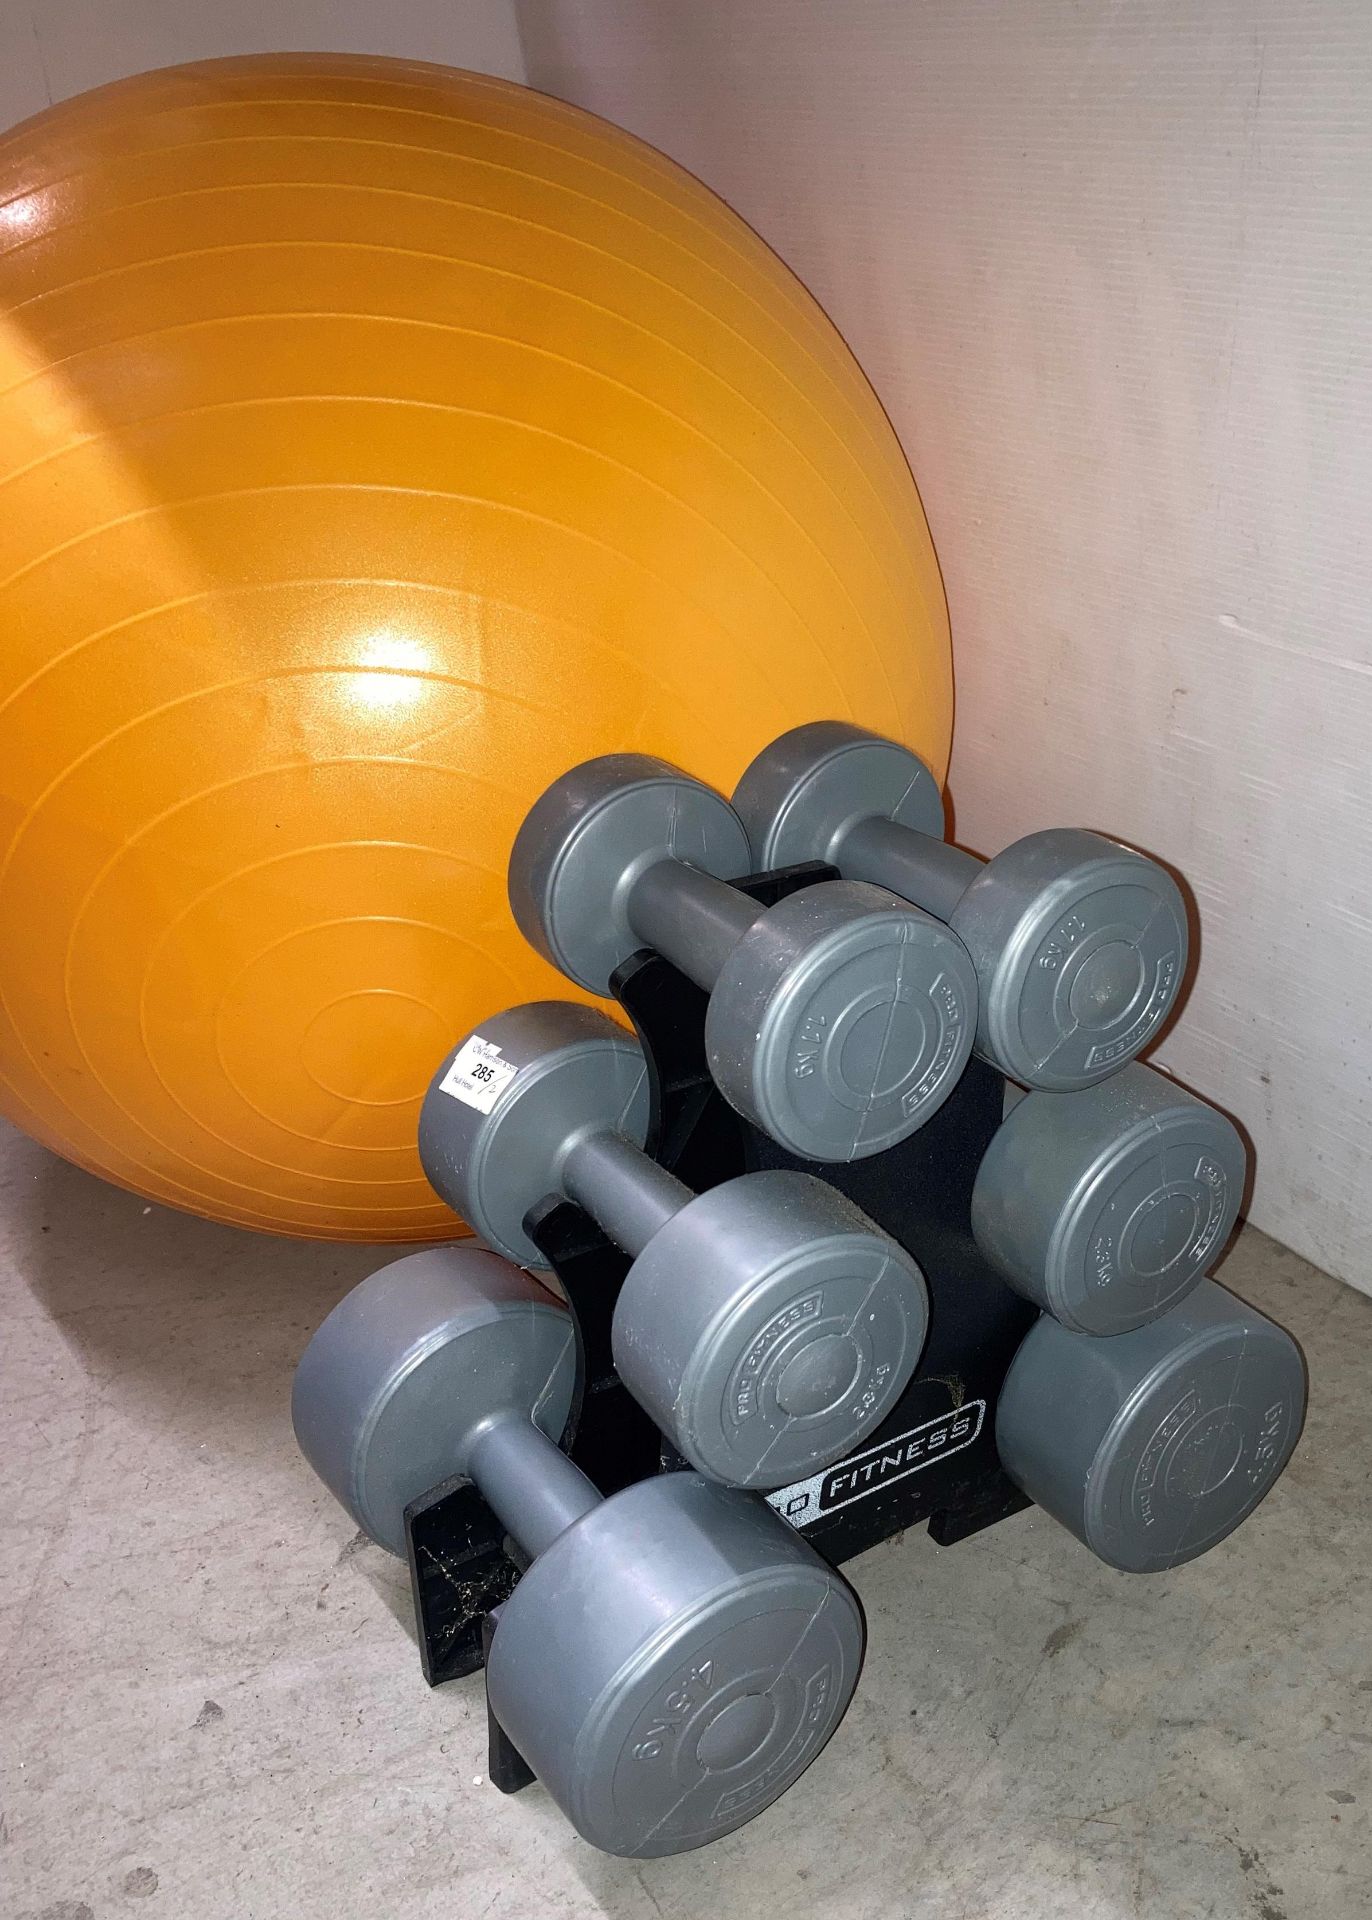 Pro Fitness set of 3 pairs of dumbbells including 1.1kg, 2.3kg, 4. - Image 2 of 2